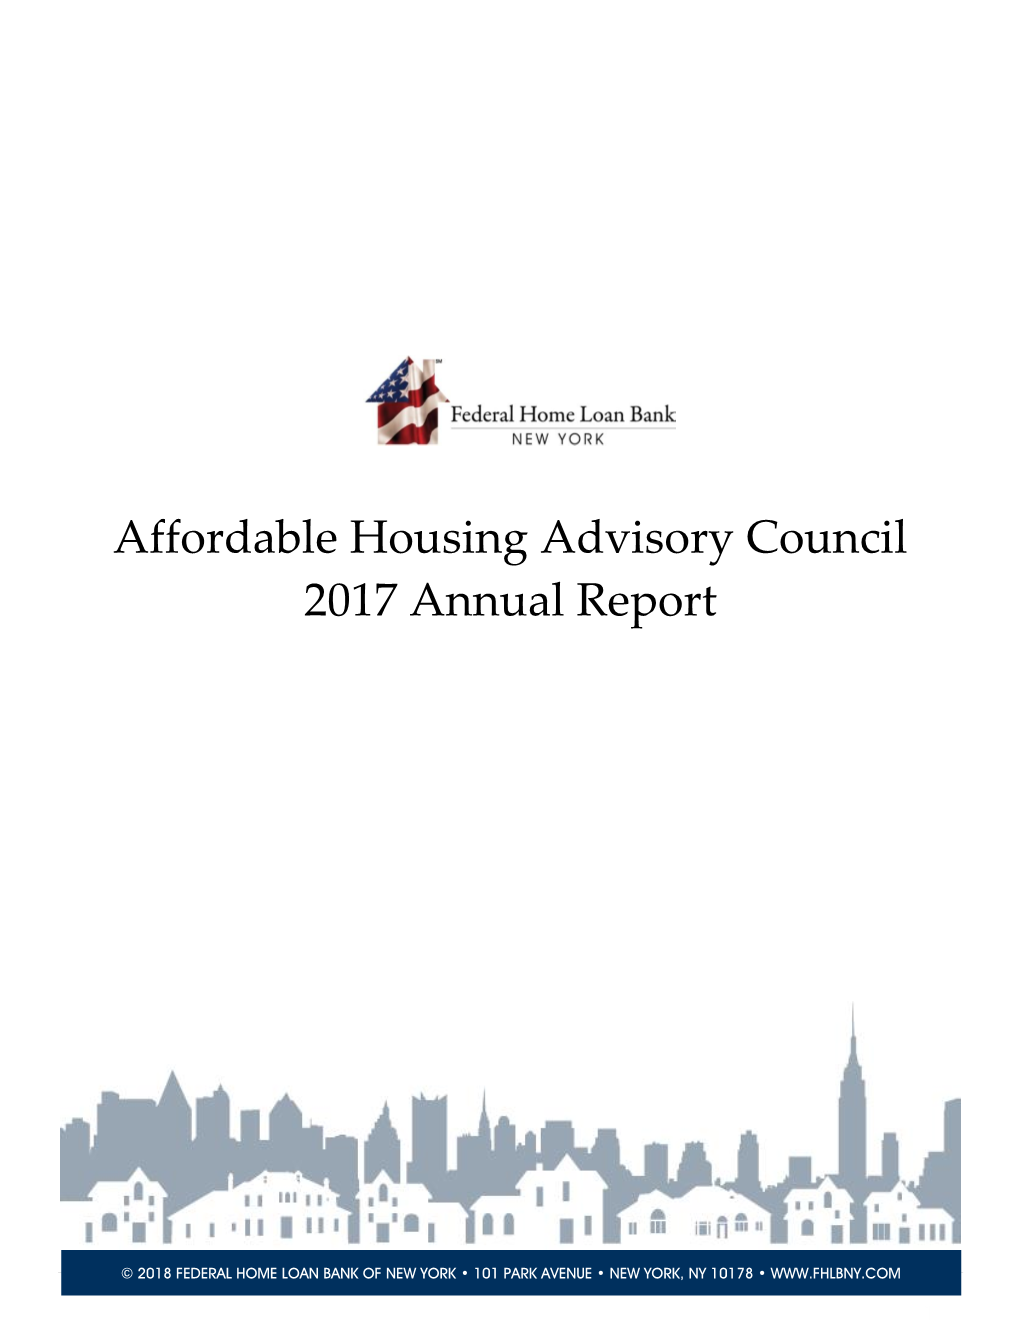 AHAC Annual Report 2017